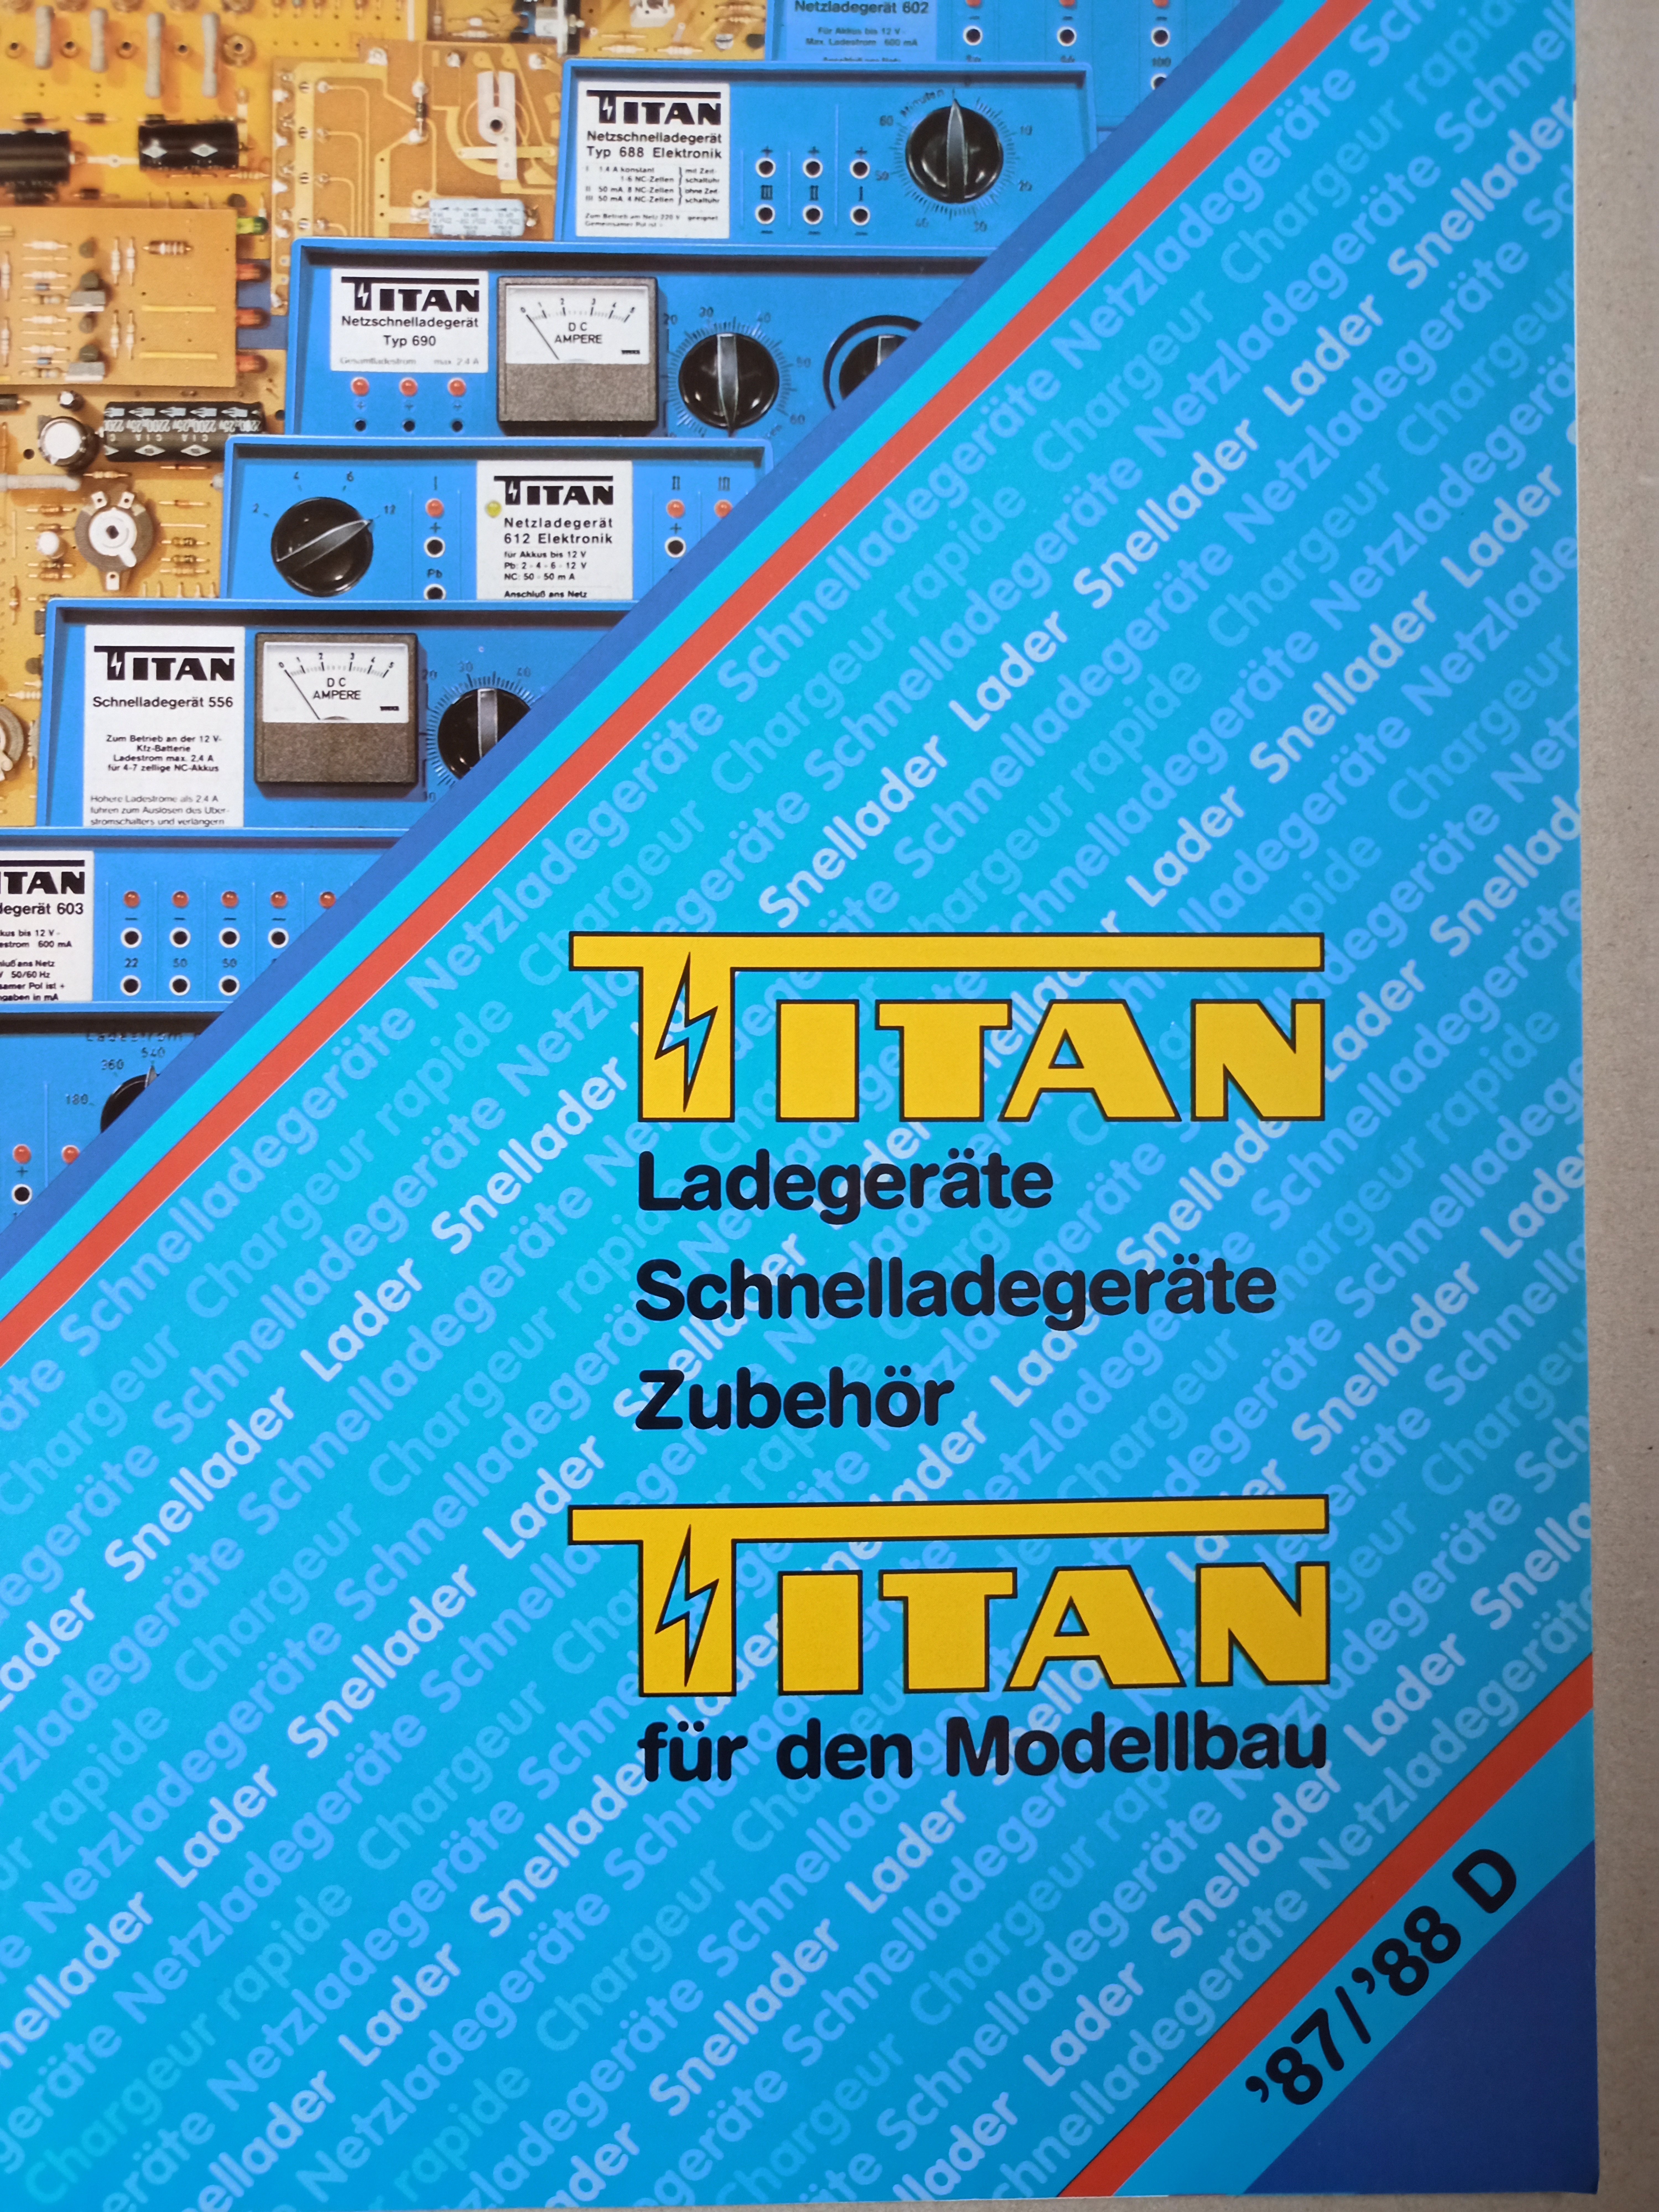 Titan Ladegeräte 1987/88 (Deutsches Segelflugmuseum mit Modellflug CC BY-NC-SA)